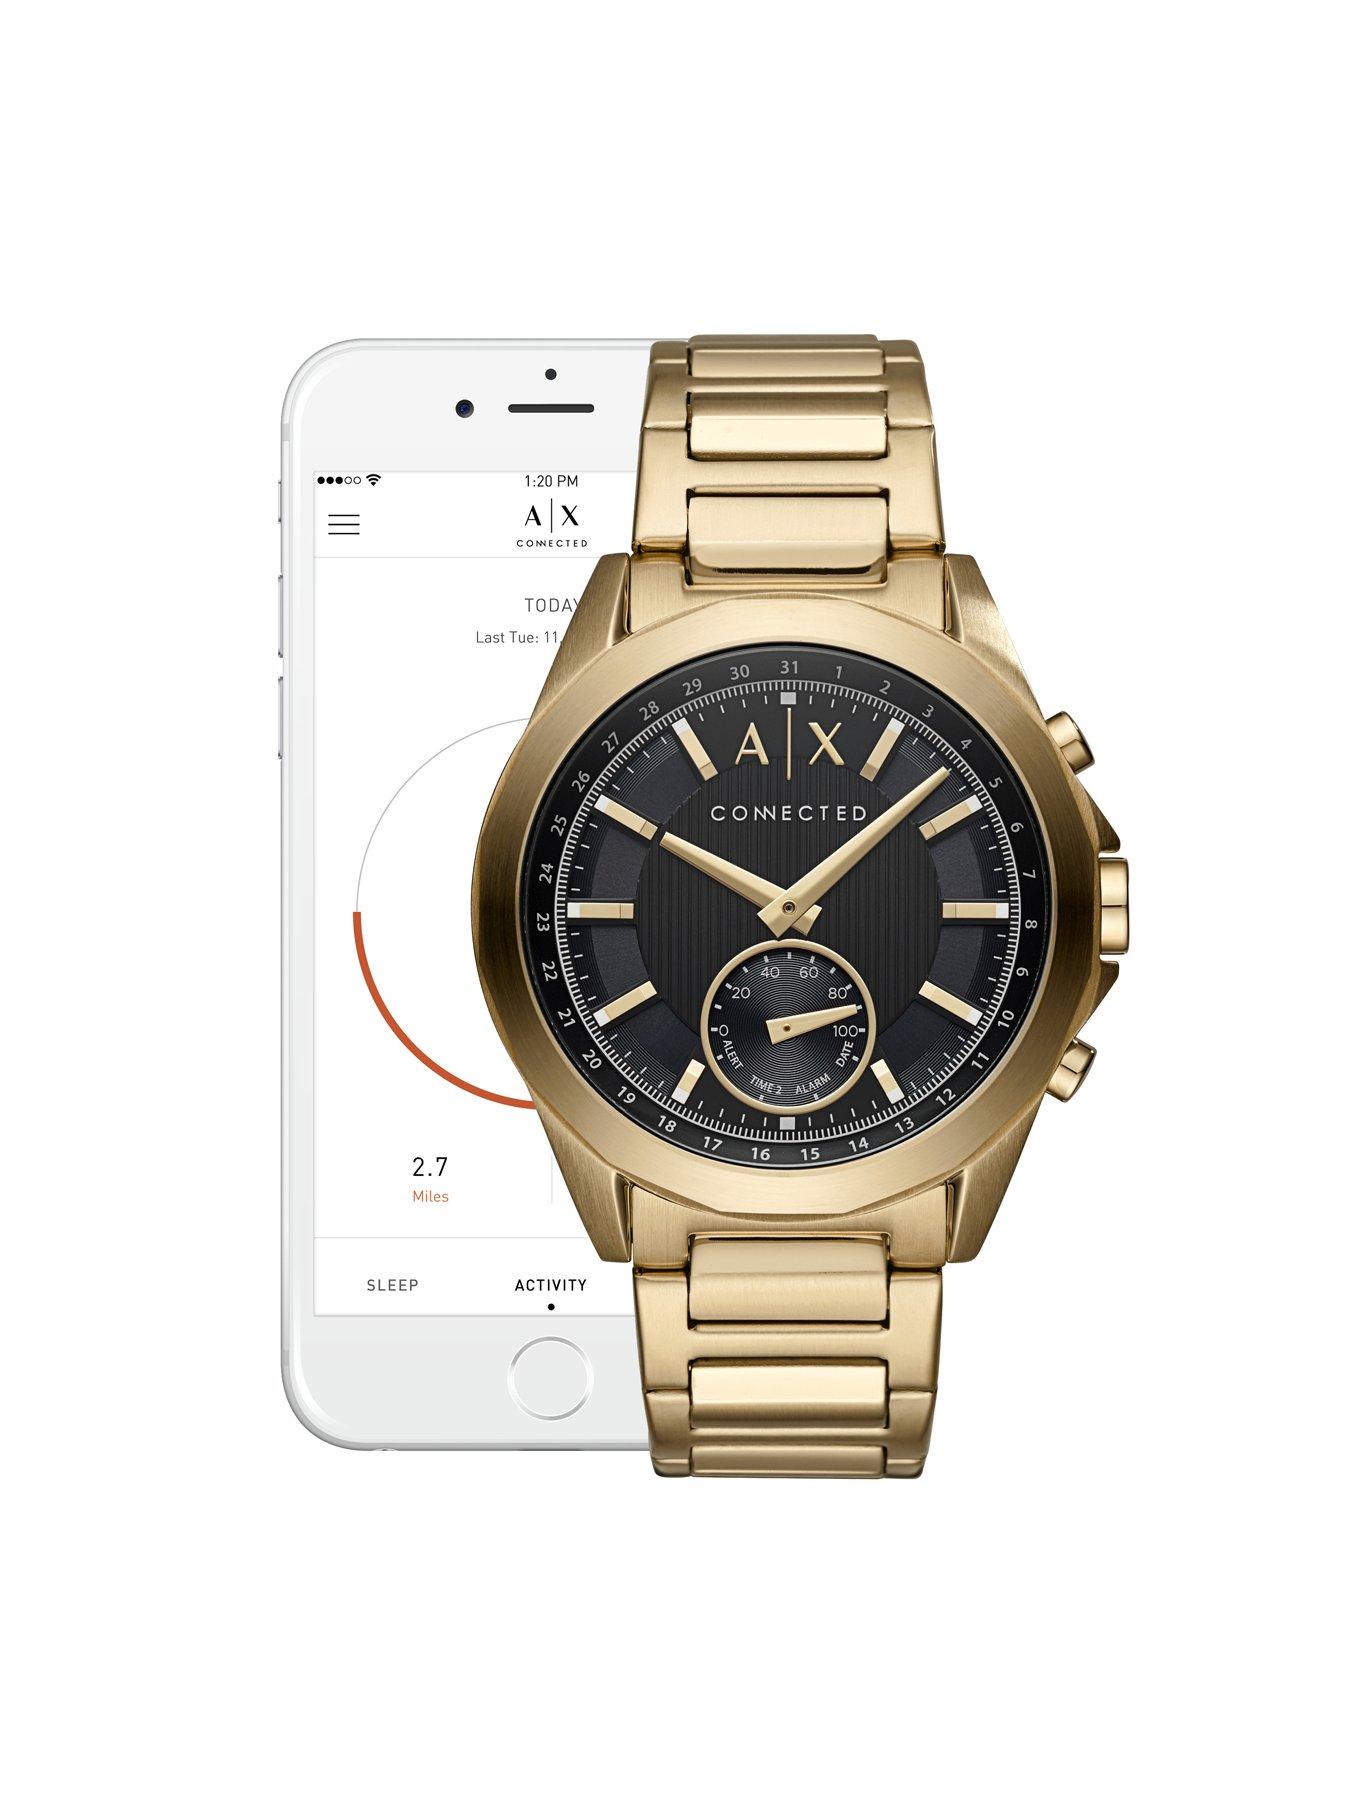 armani exchange hybrid smartwatch features